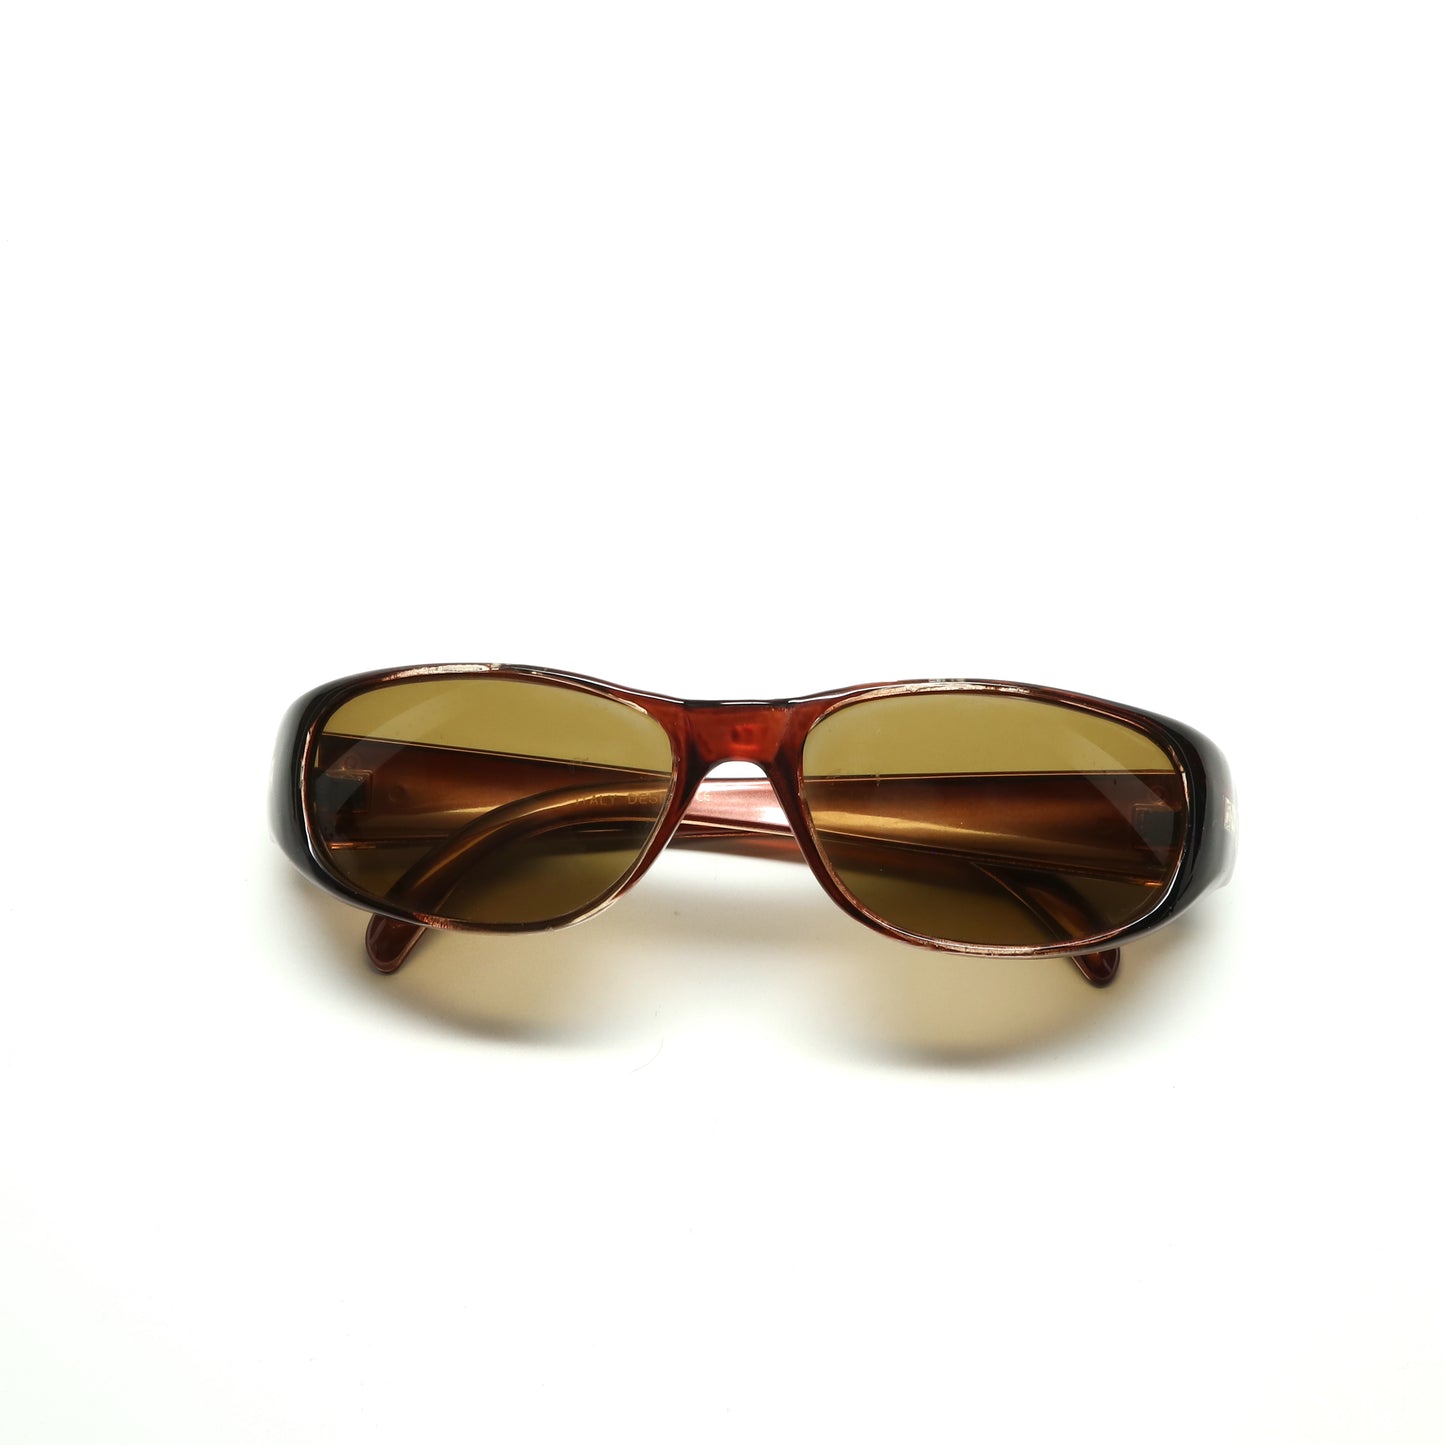 Deluxe Vintage Y2k Chic Wraparound Sunglasses - Tortoise Red